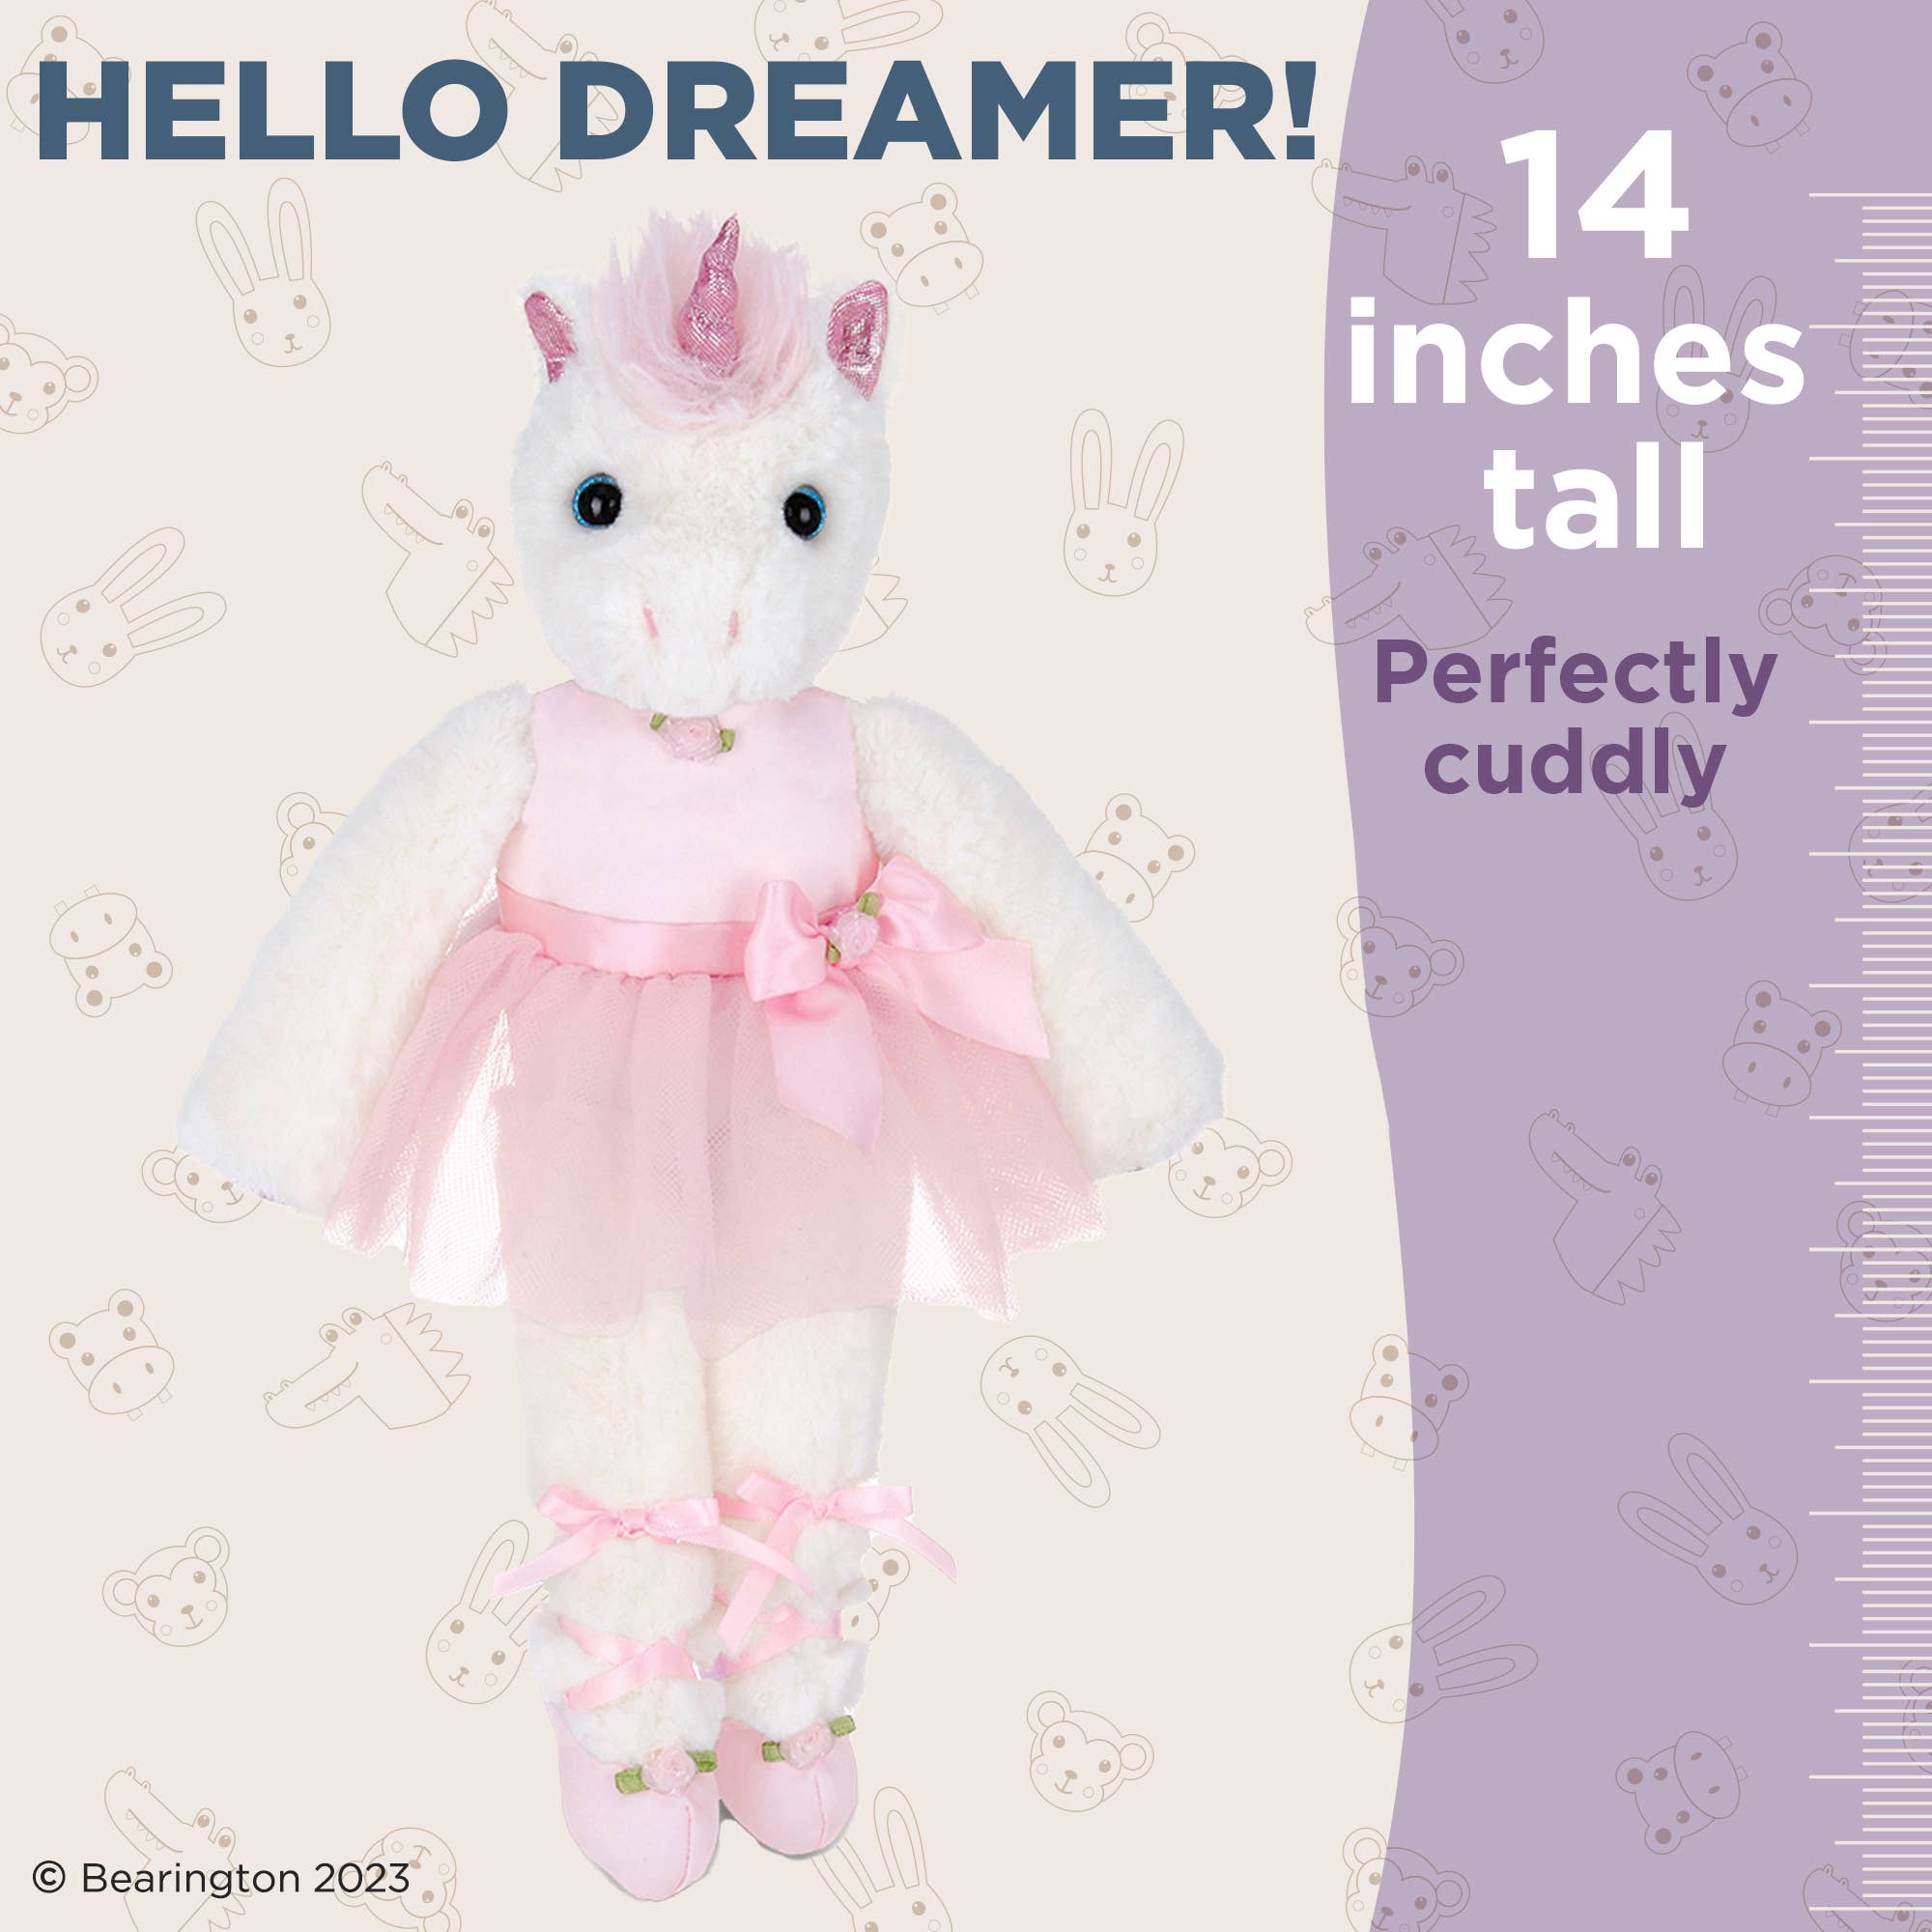 Dreamer the Unicorn Ballerina